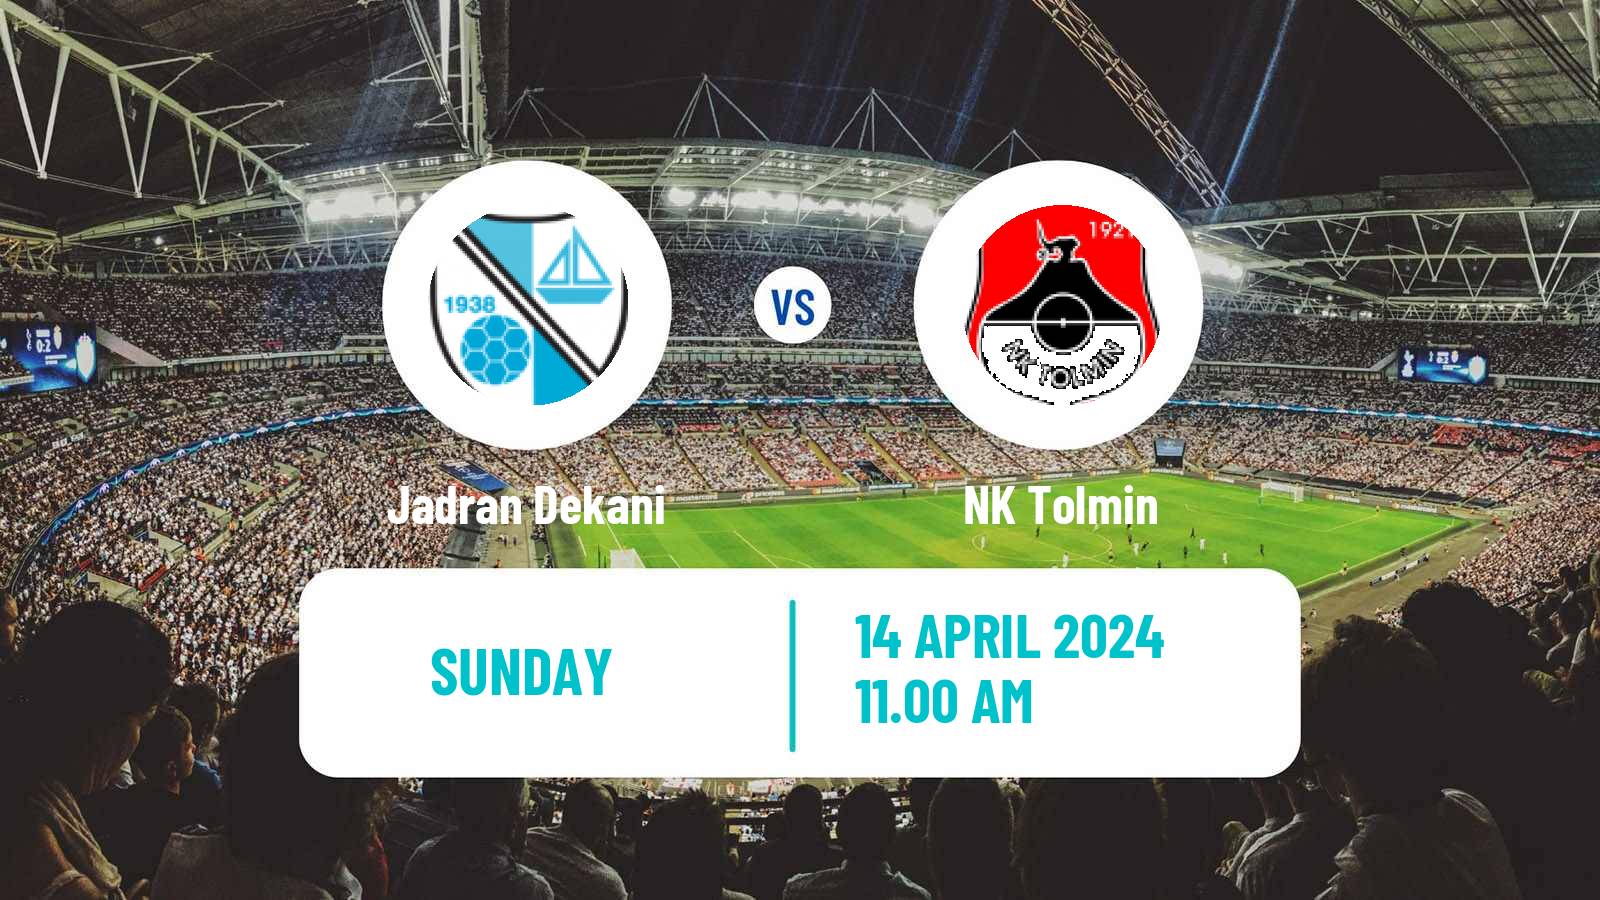 Soccer Slovenian 2 SNL Jadran Dekani - Tolmin